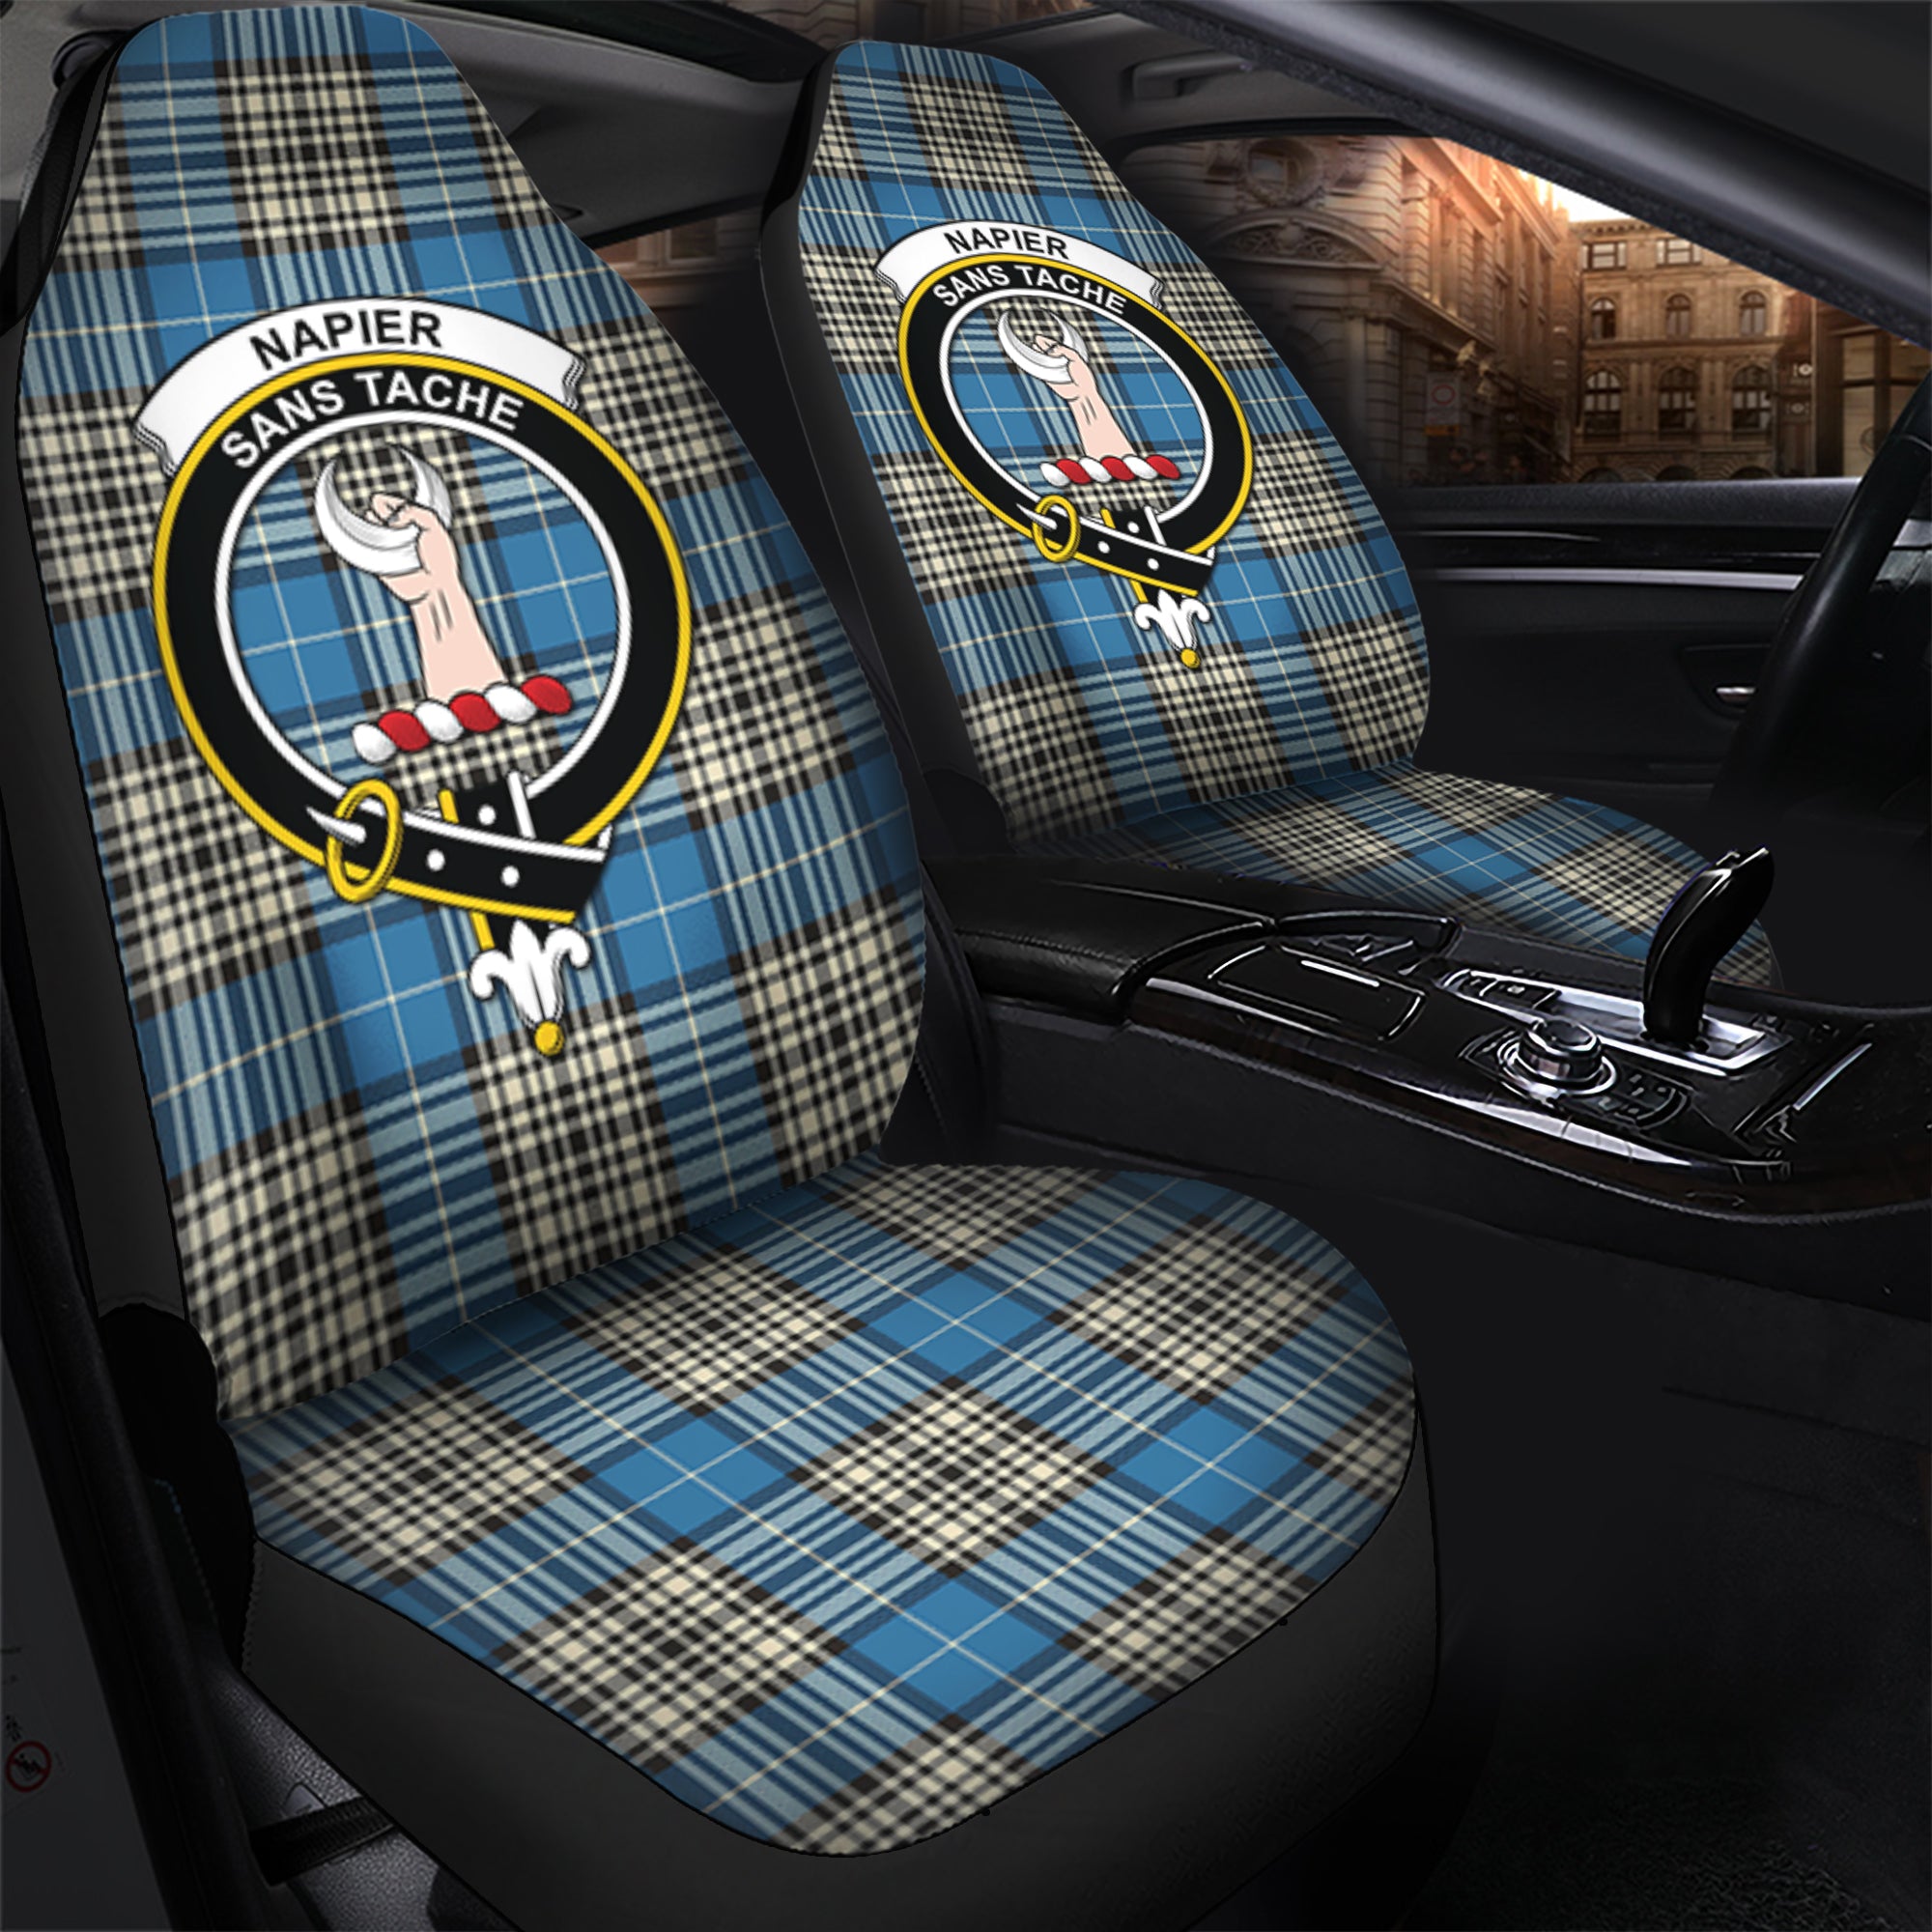 Napier Ancient Clan Tartan Car Seat Cover, Family Crest Tartan Seat Cover TS23